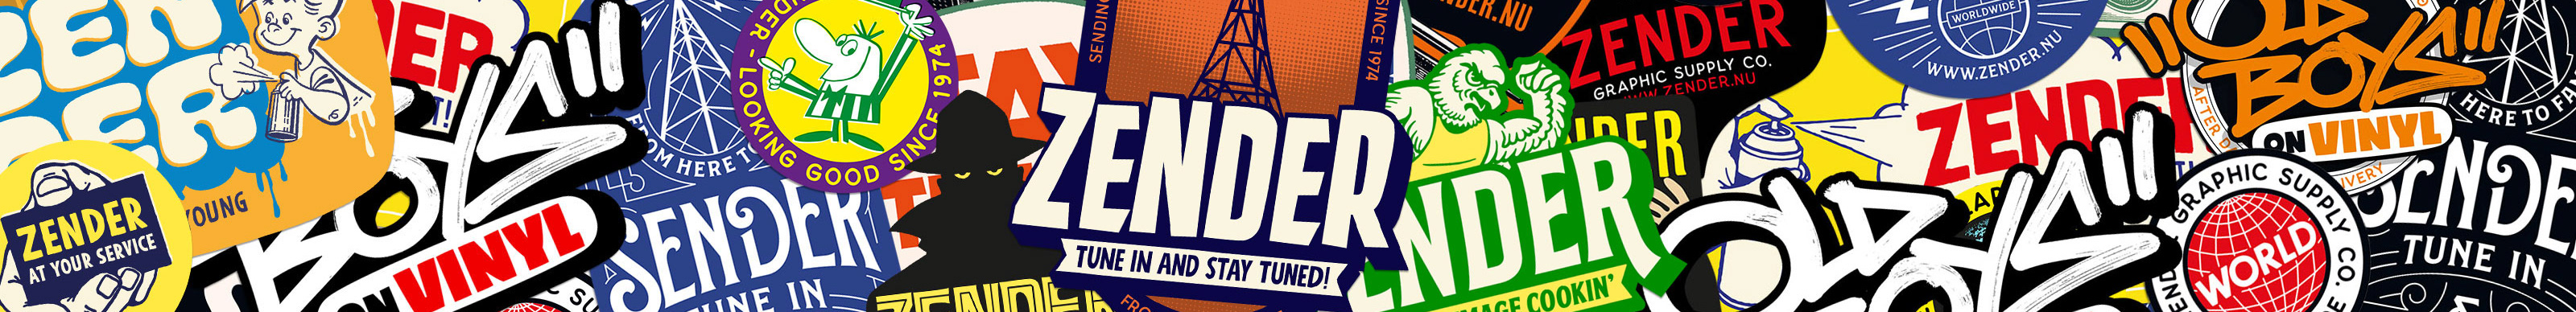 Zender !'s profile banner